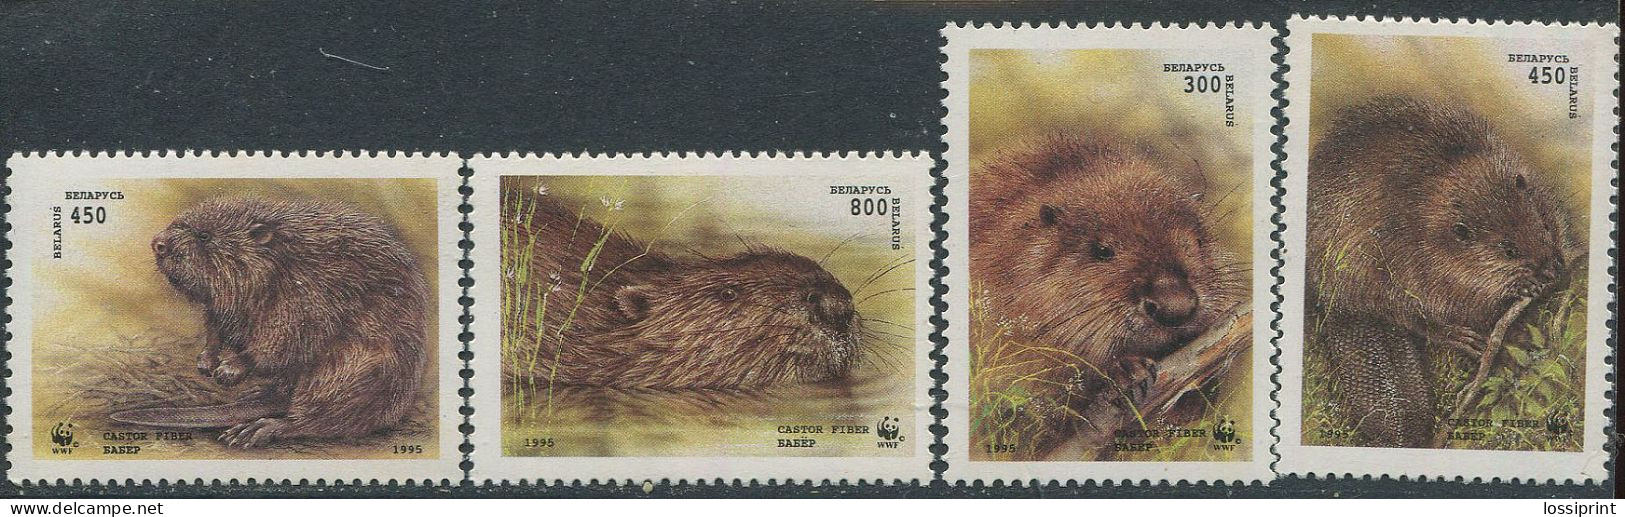 Belarus:Unused Stamps Serie WWF, Rodent, Castor Fiber, 1995, MNH - Bielorrusia